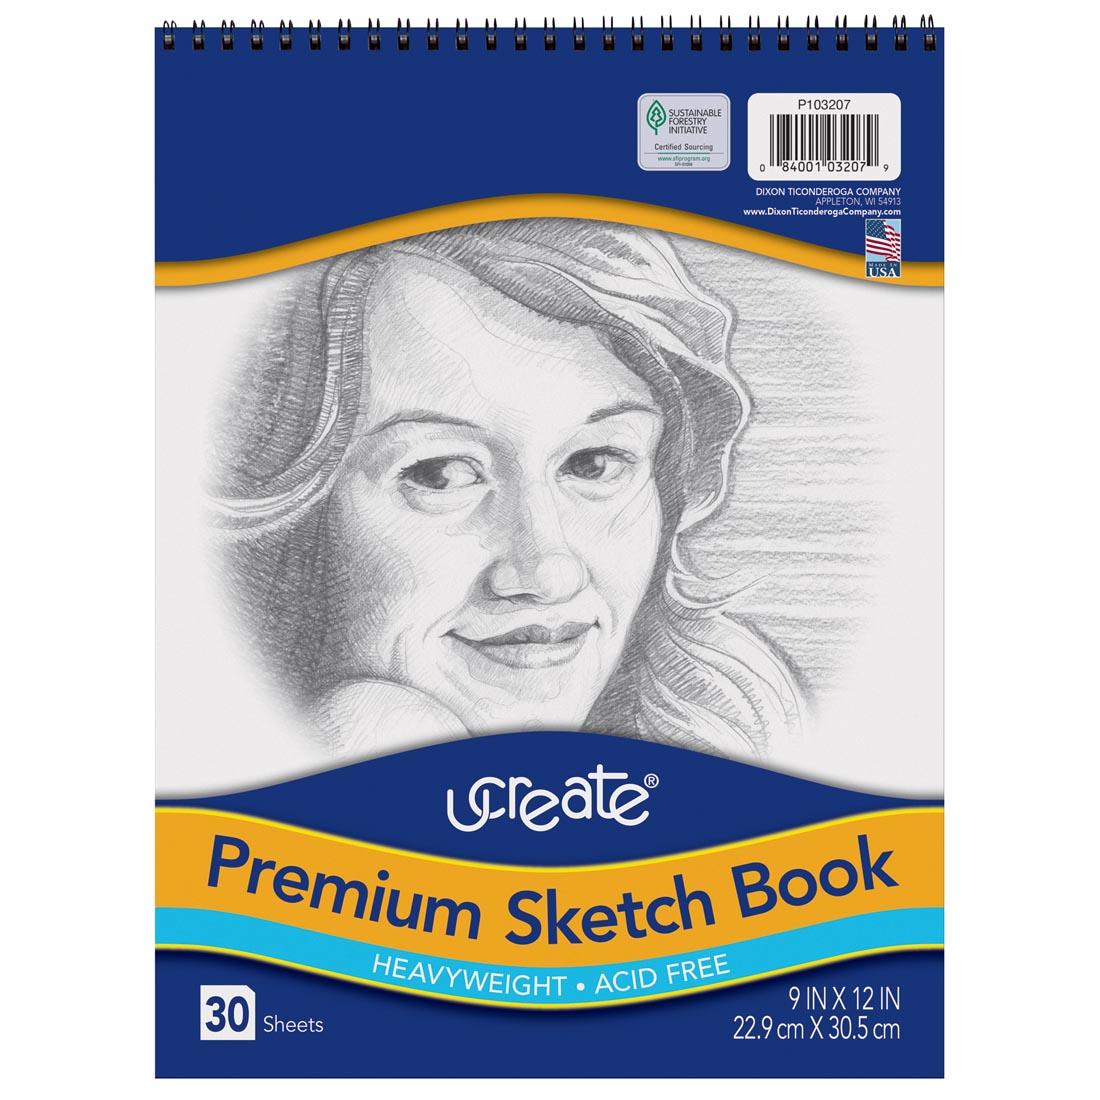 UCreate Premium Sketch Book